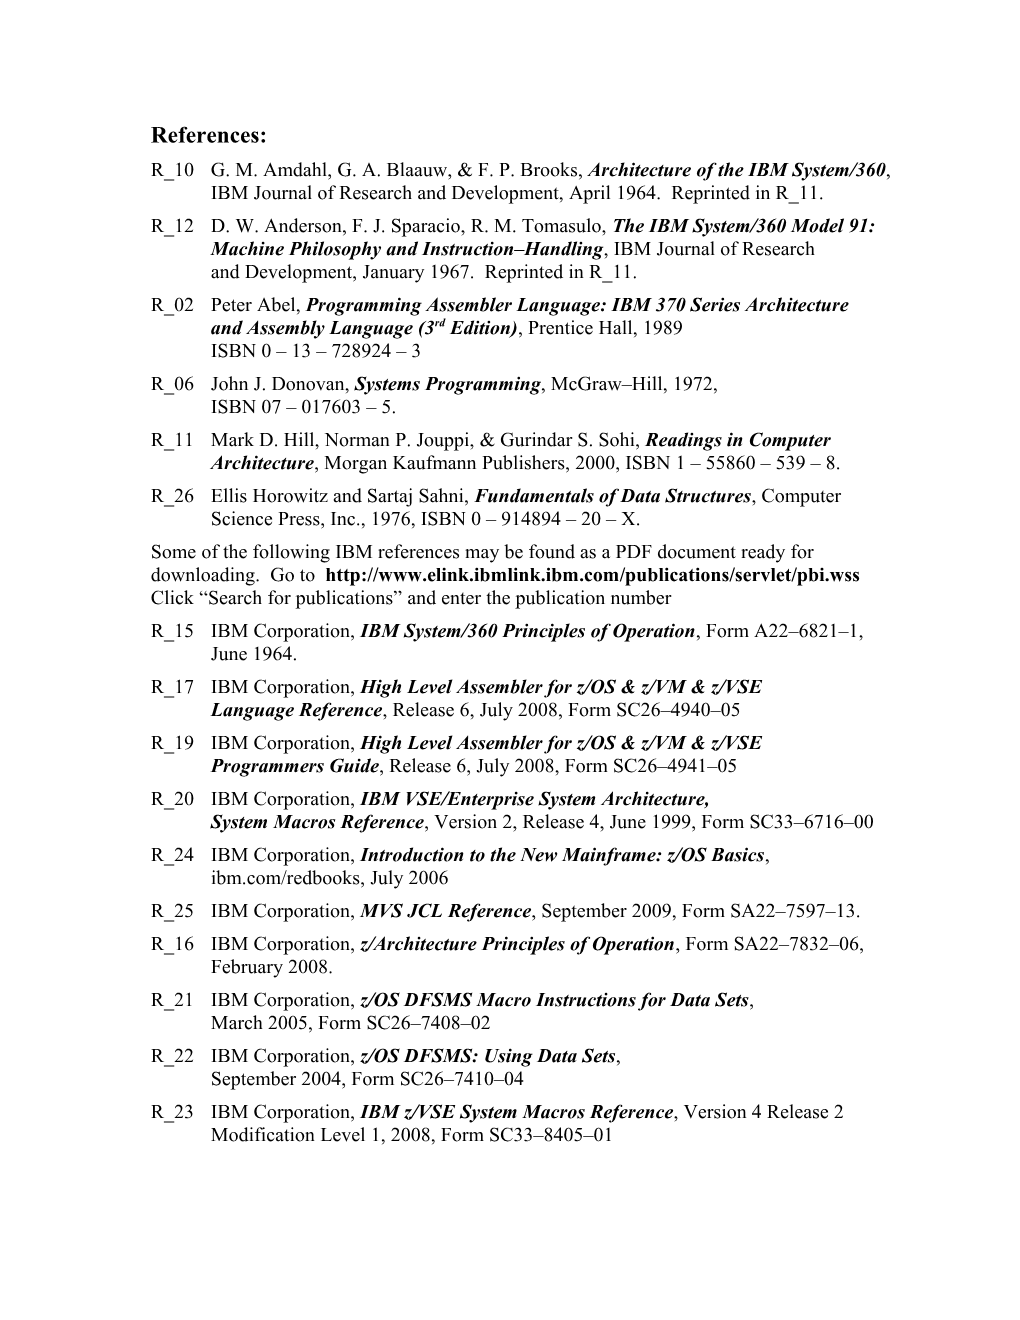 R 10 G. M. Amdahl, G. A. Blaauw, & F. P. Brooks, Architecture of the IBM System/360 , IBM